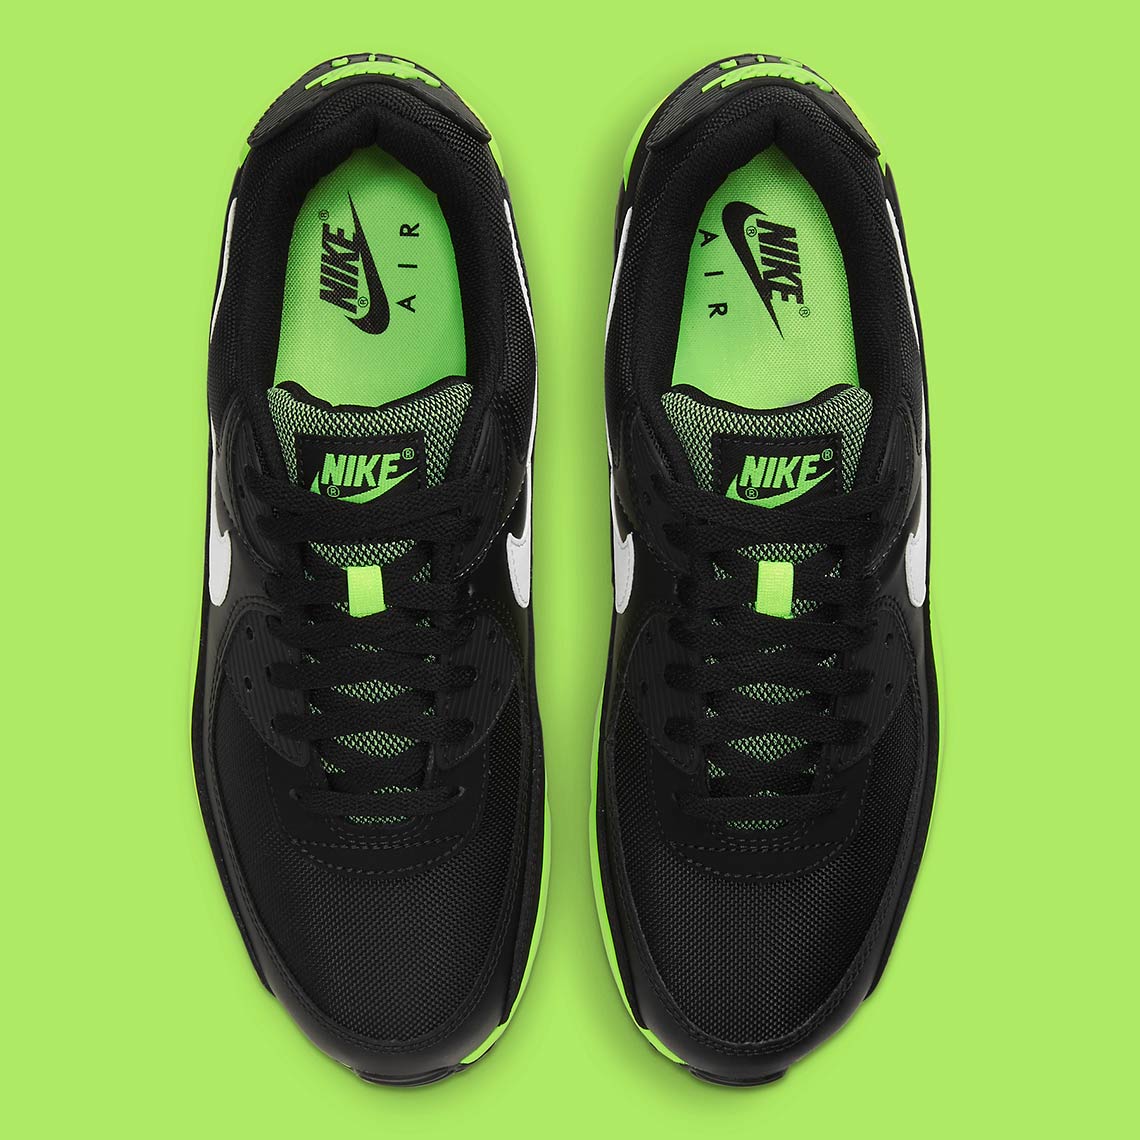 Nike Air Max online 90 Hot Lime DB3915 001 3